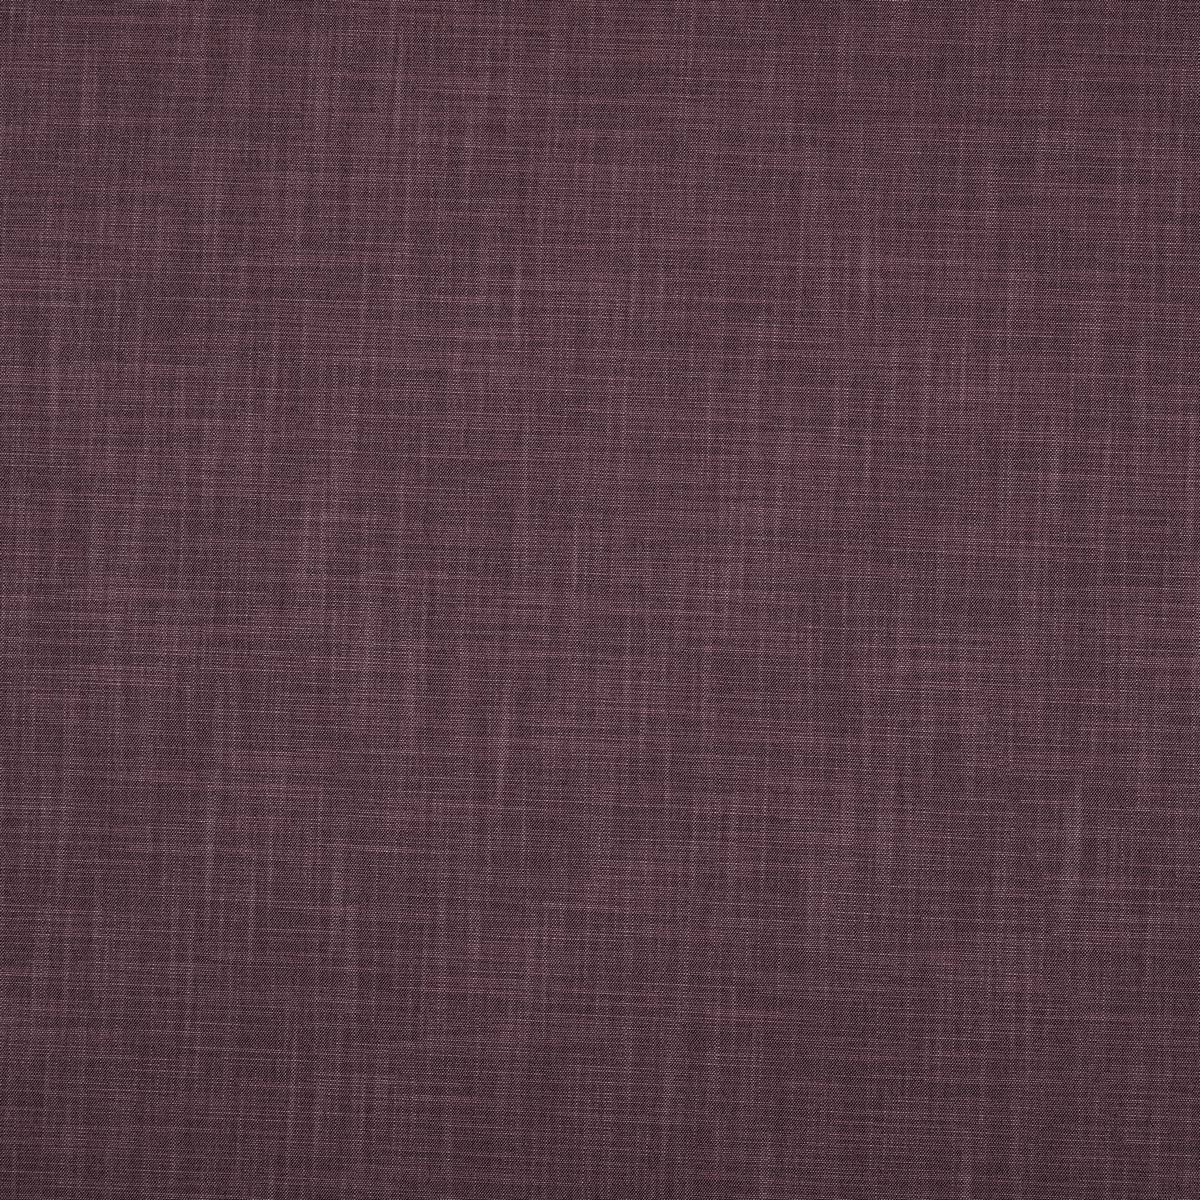 Zander Mulberry Fabric by Ashley Wilde